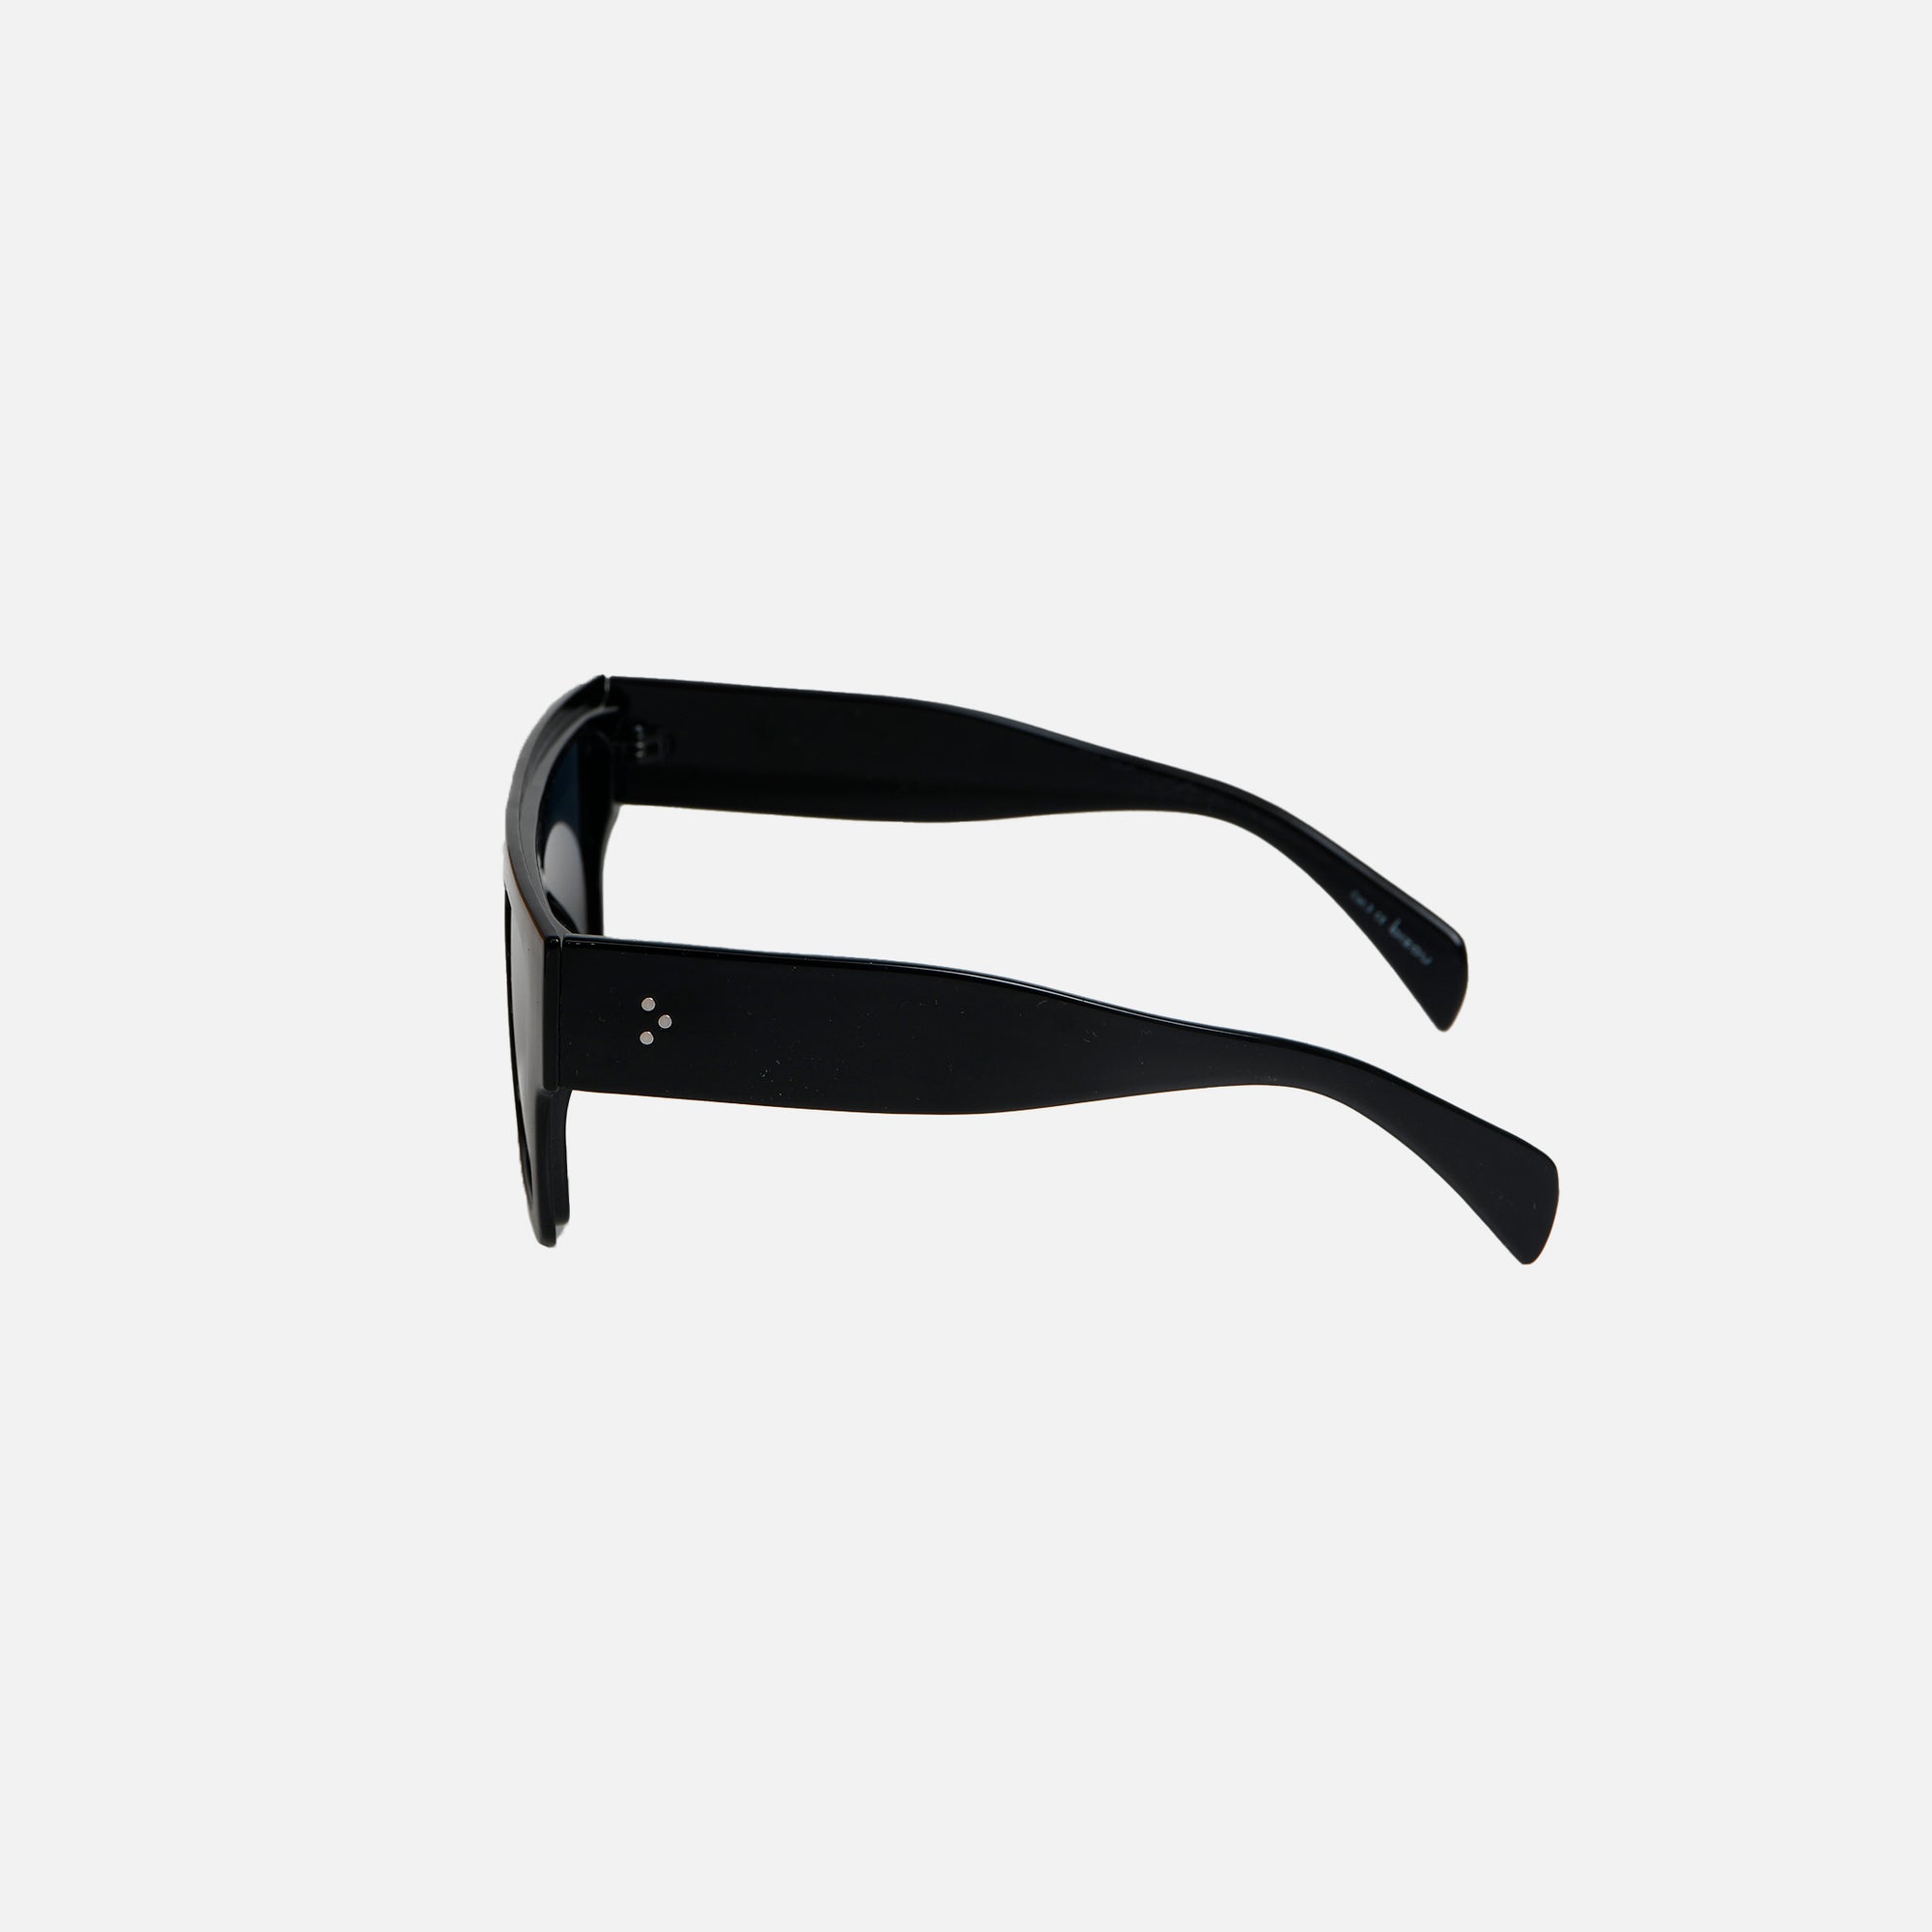 Black sunglasses square frame